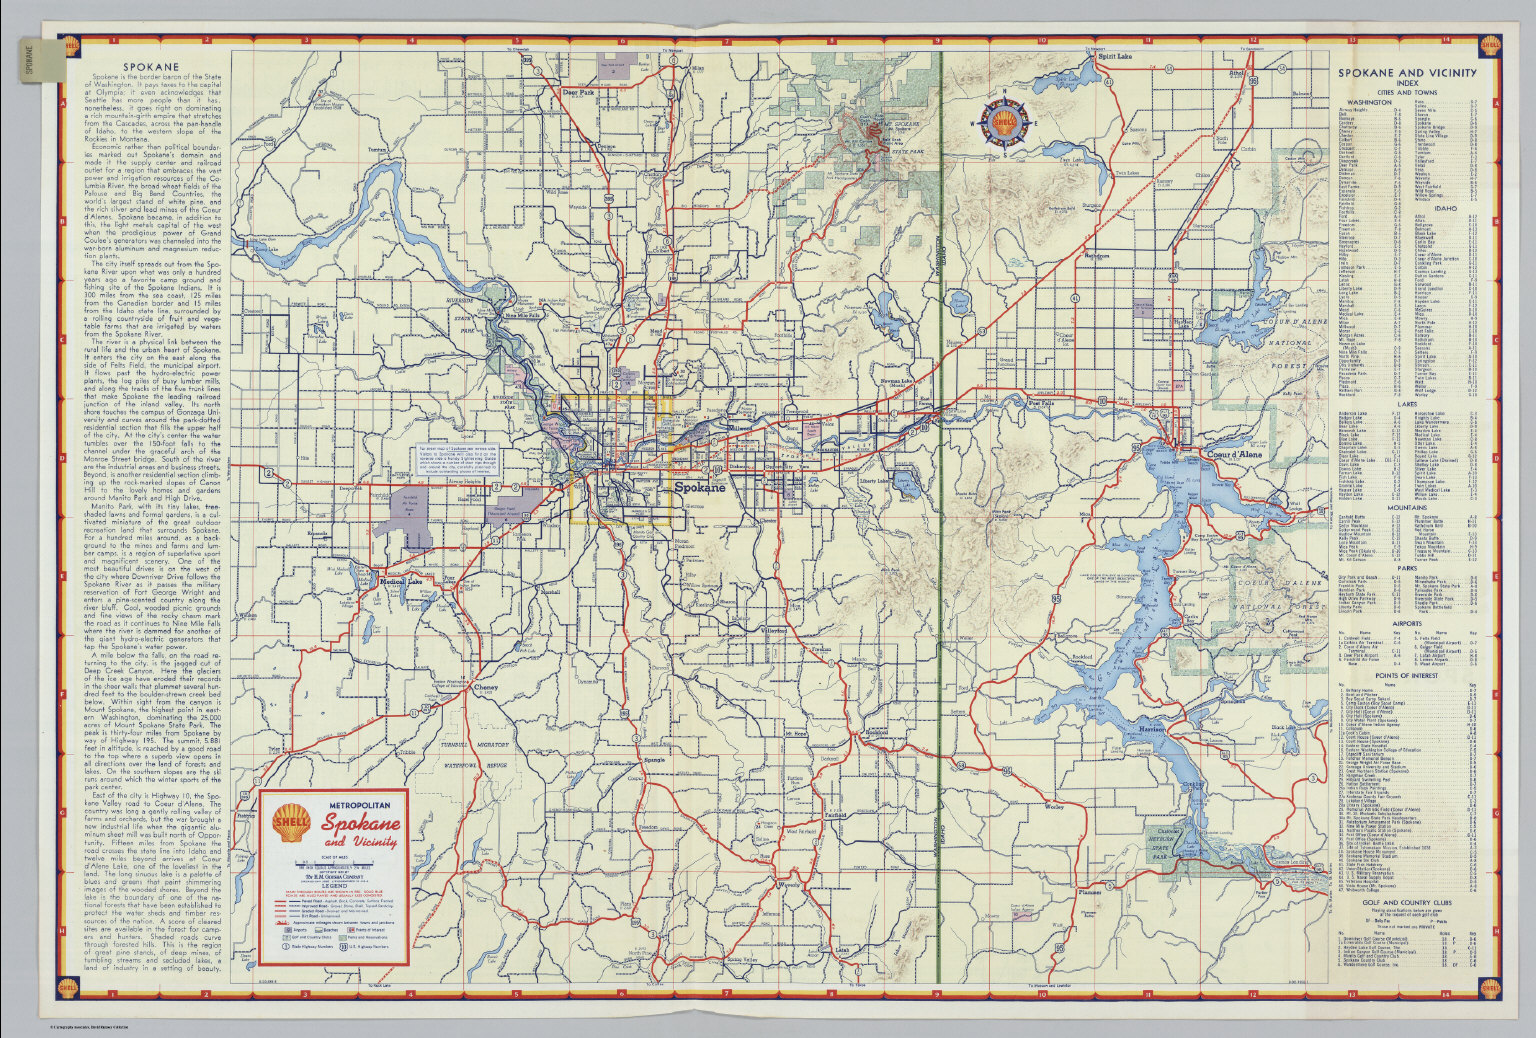 Shell Metropolitan Spokane And Vicinity David Rumsey Historical Map